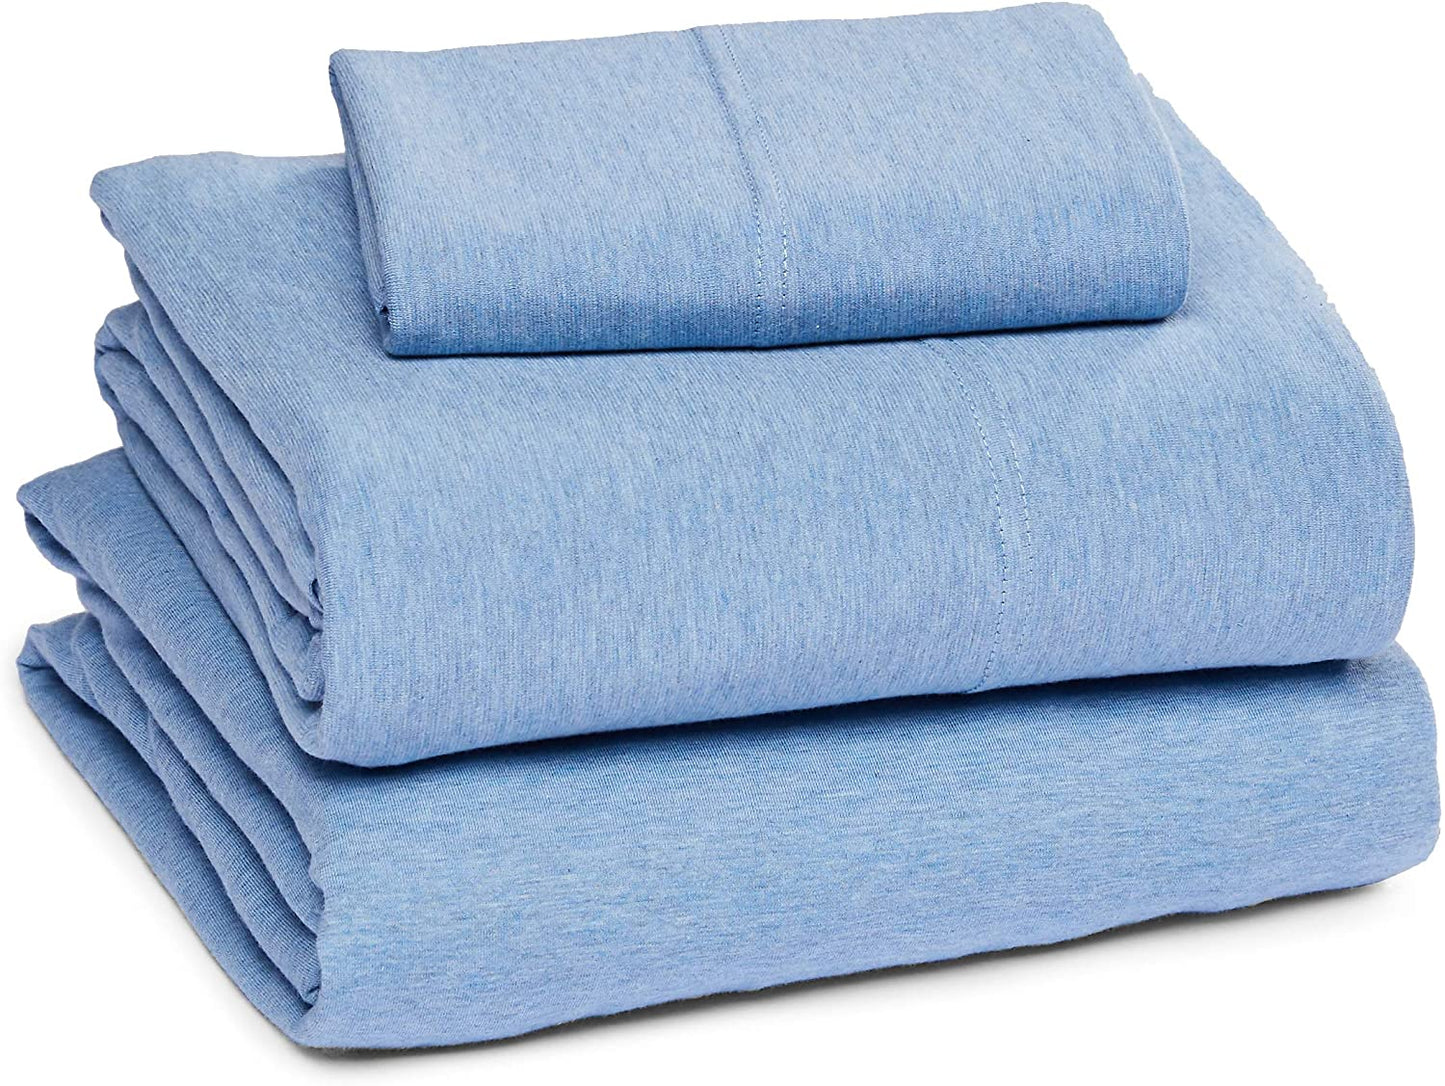 Cotton Jersey Bed Sheet Set - Twin, Black